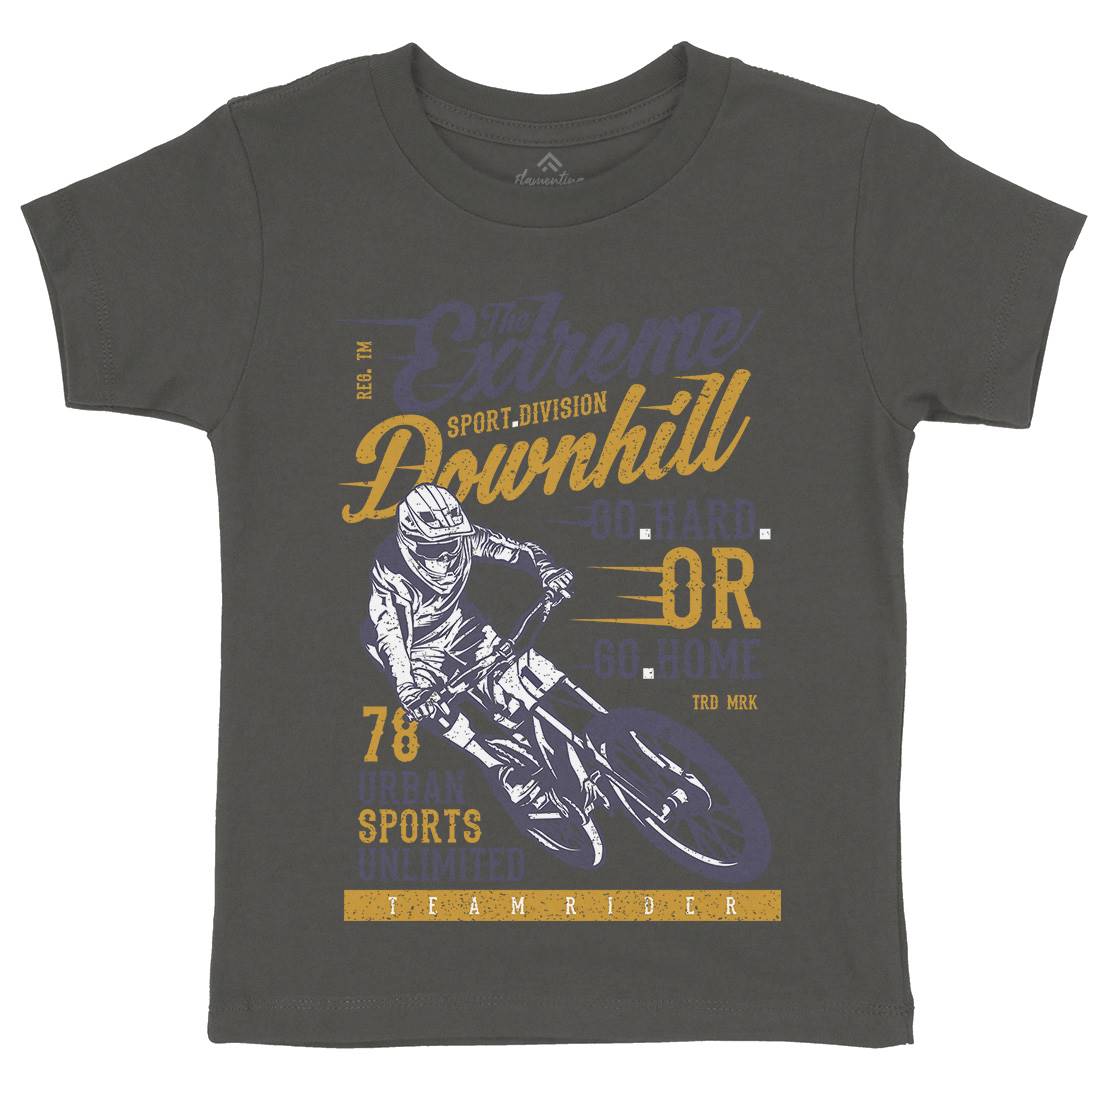 Extreme Downhill Kids Crew Neck T-Shirt Bikes A772